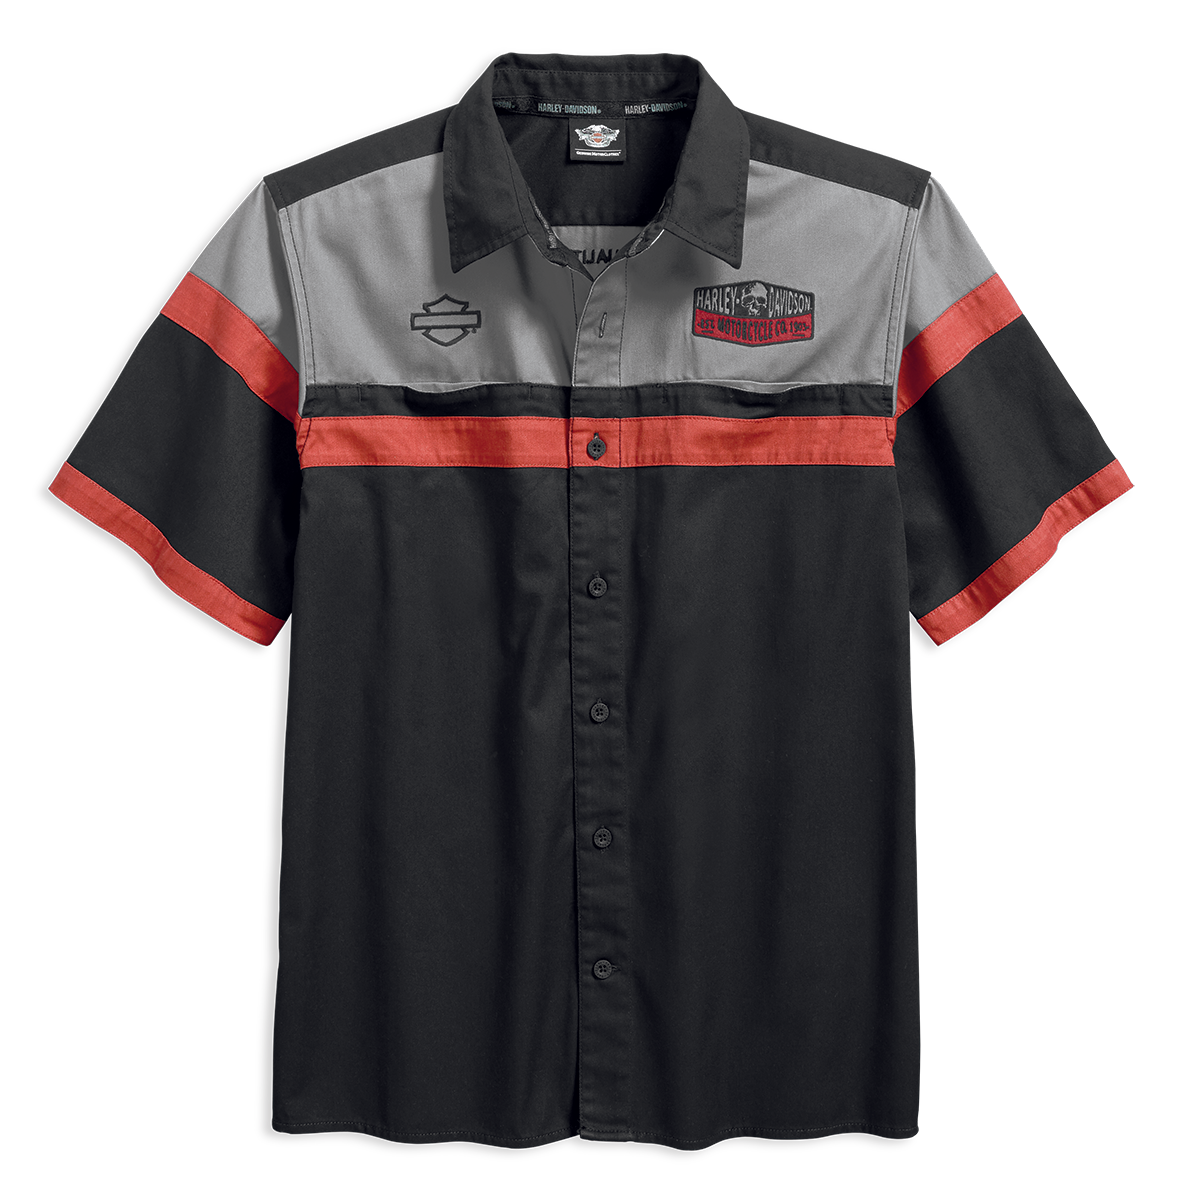 Harley-Davidson Colourblack Garage Men's Shirt